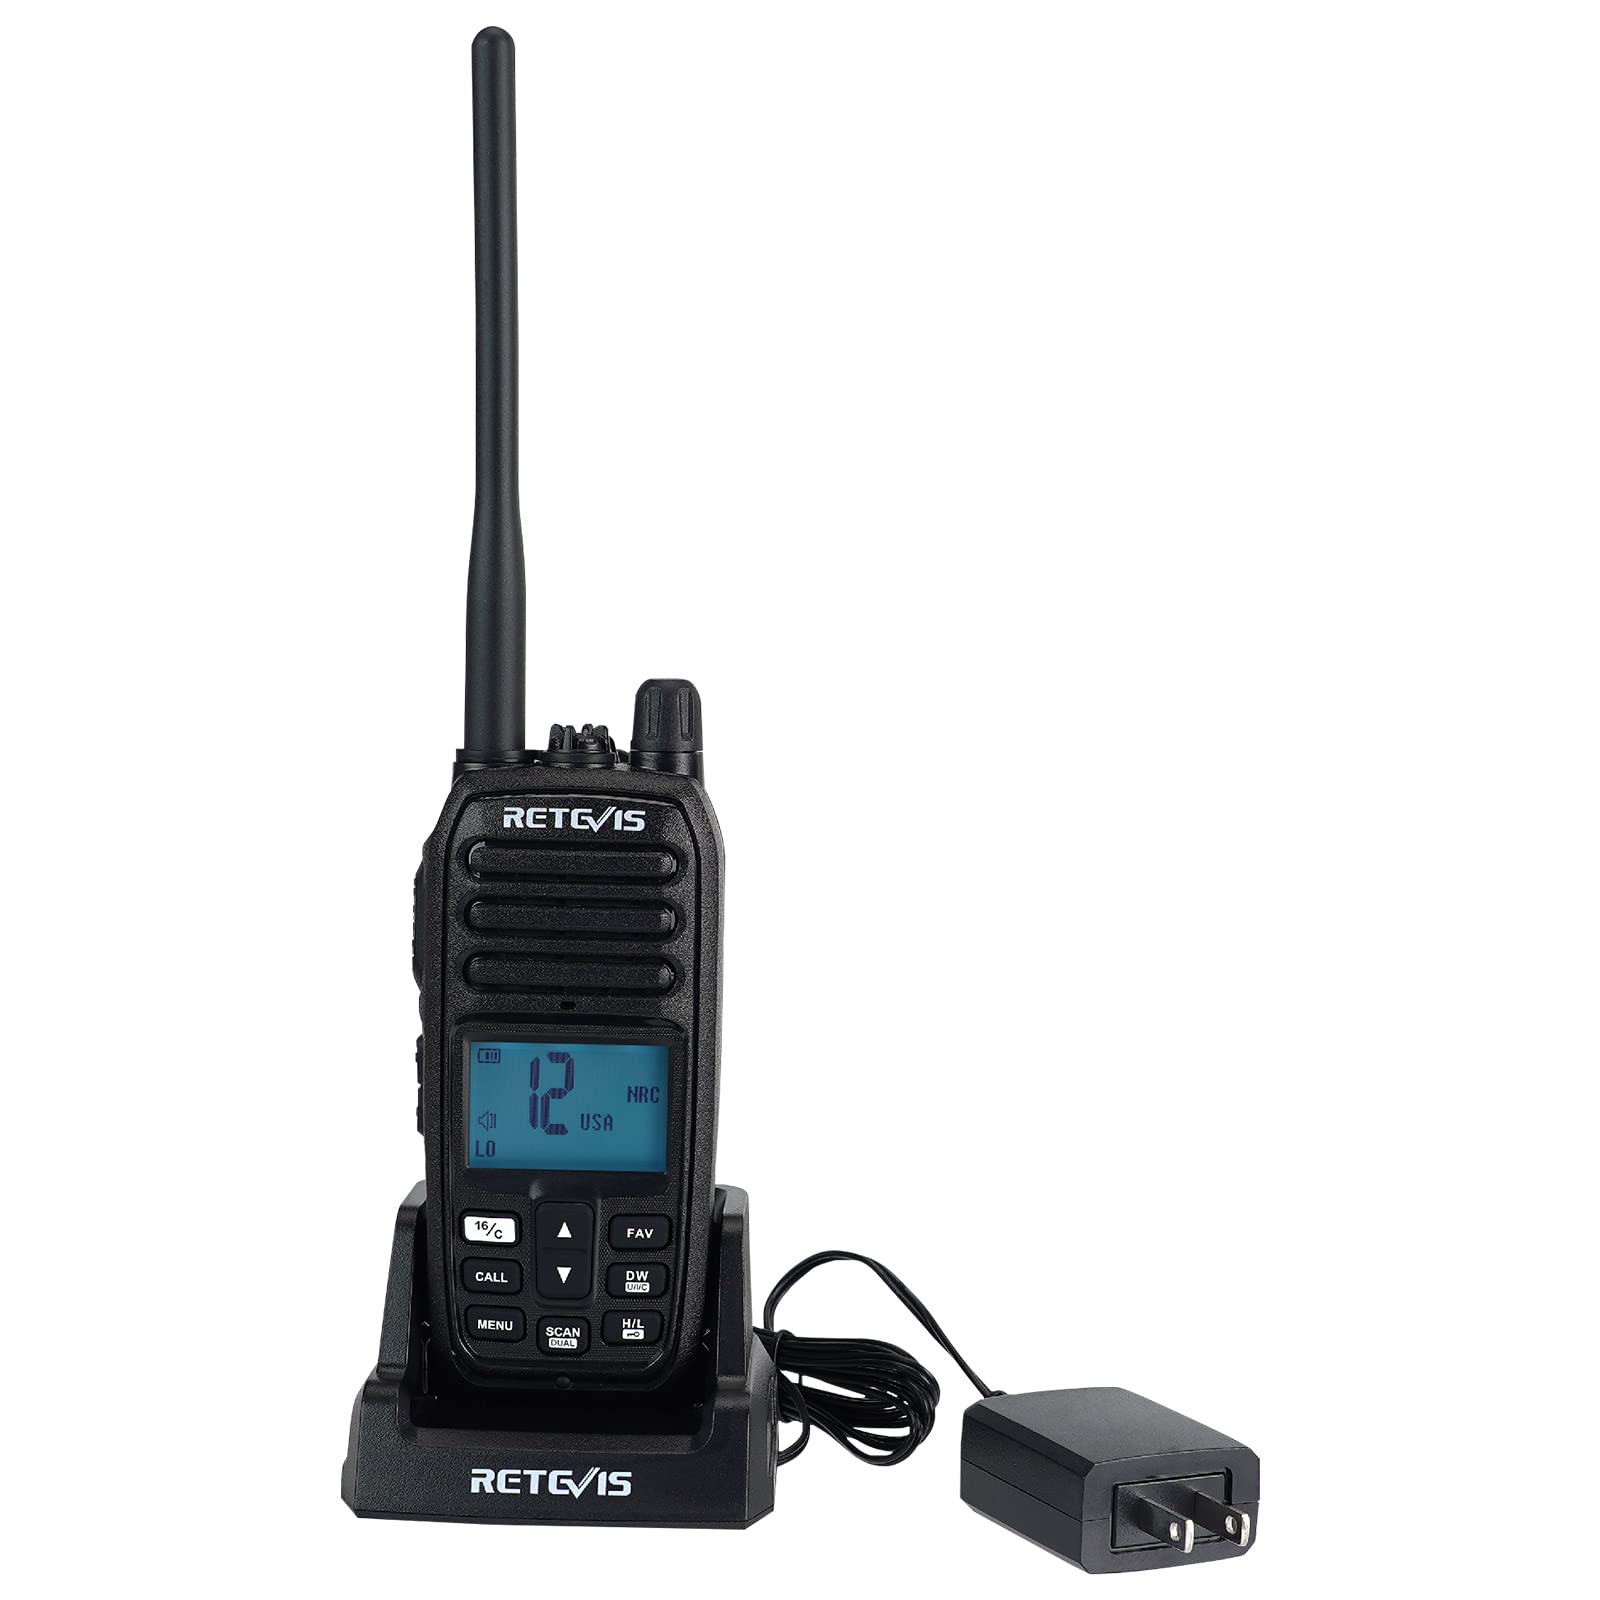 Retevis RM21 Marine Band Handheld Radio,Marine Two-Way Radios,Active Noise Cancellation,Suppress Background Noise,Ship to Shore Radio for Jet Ski